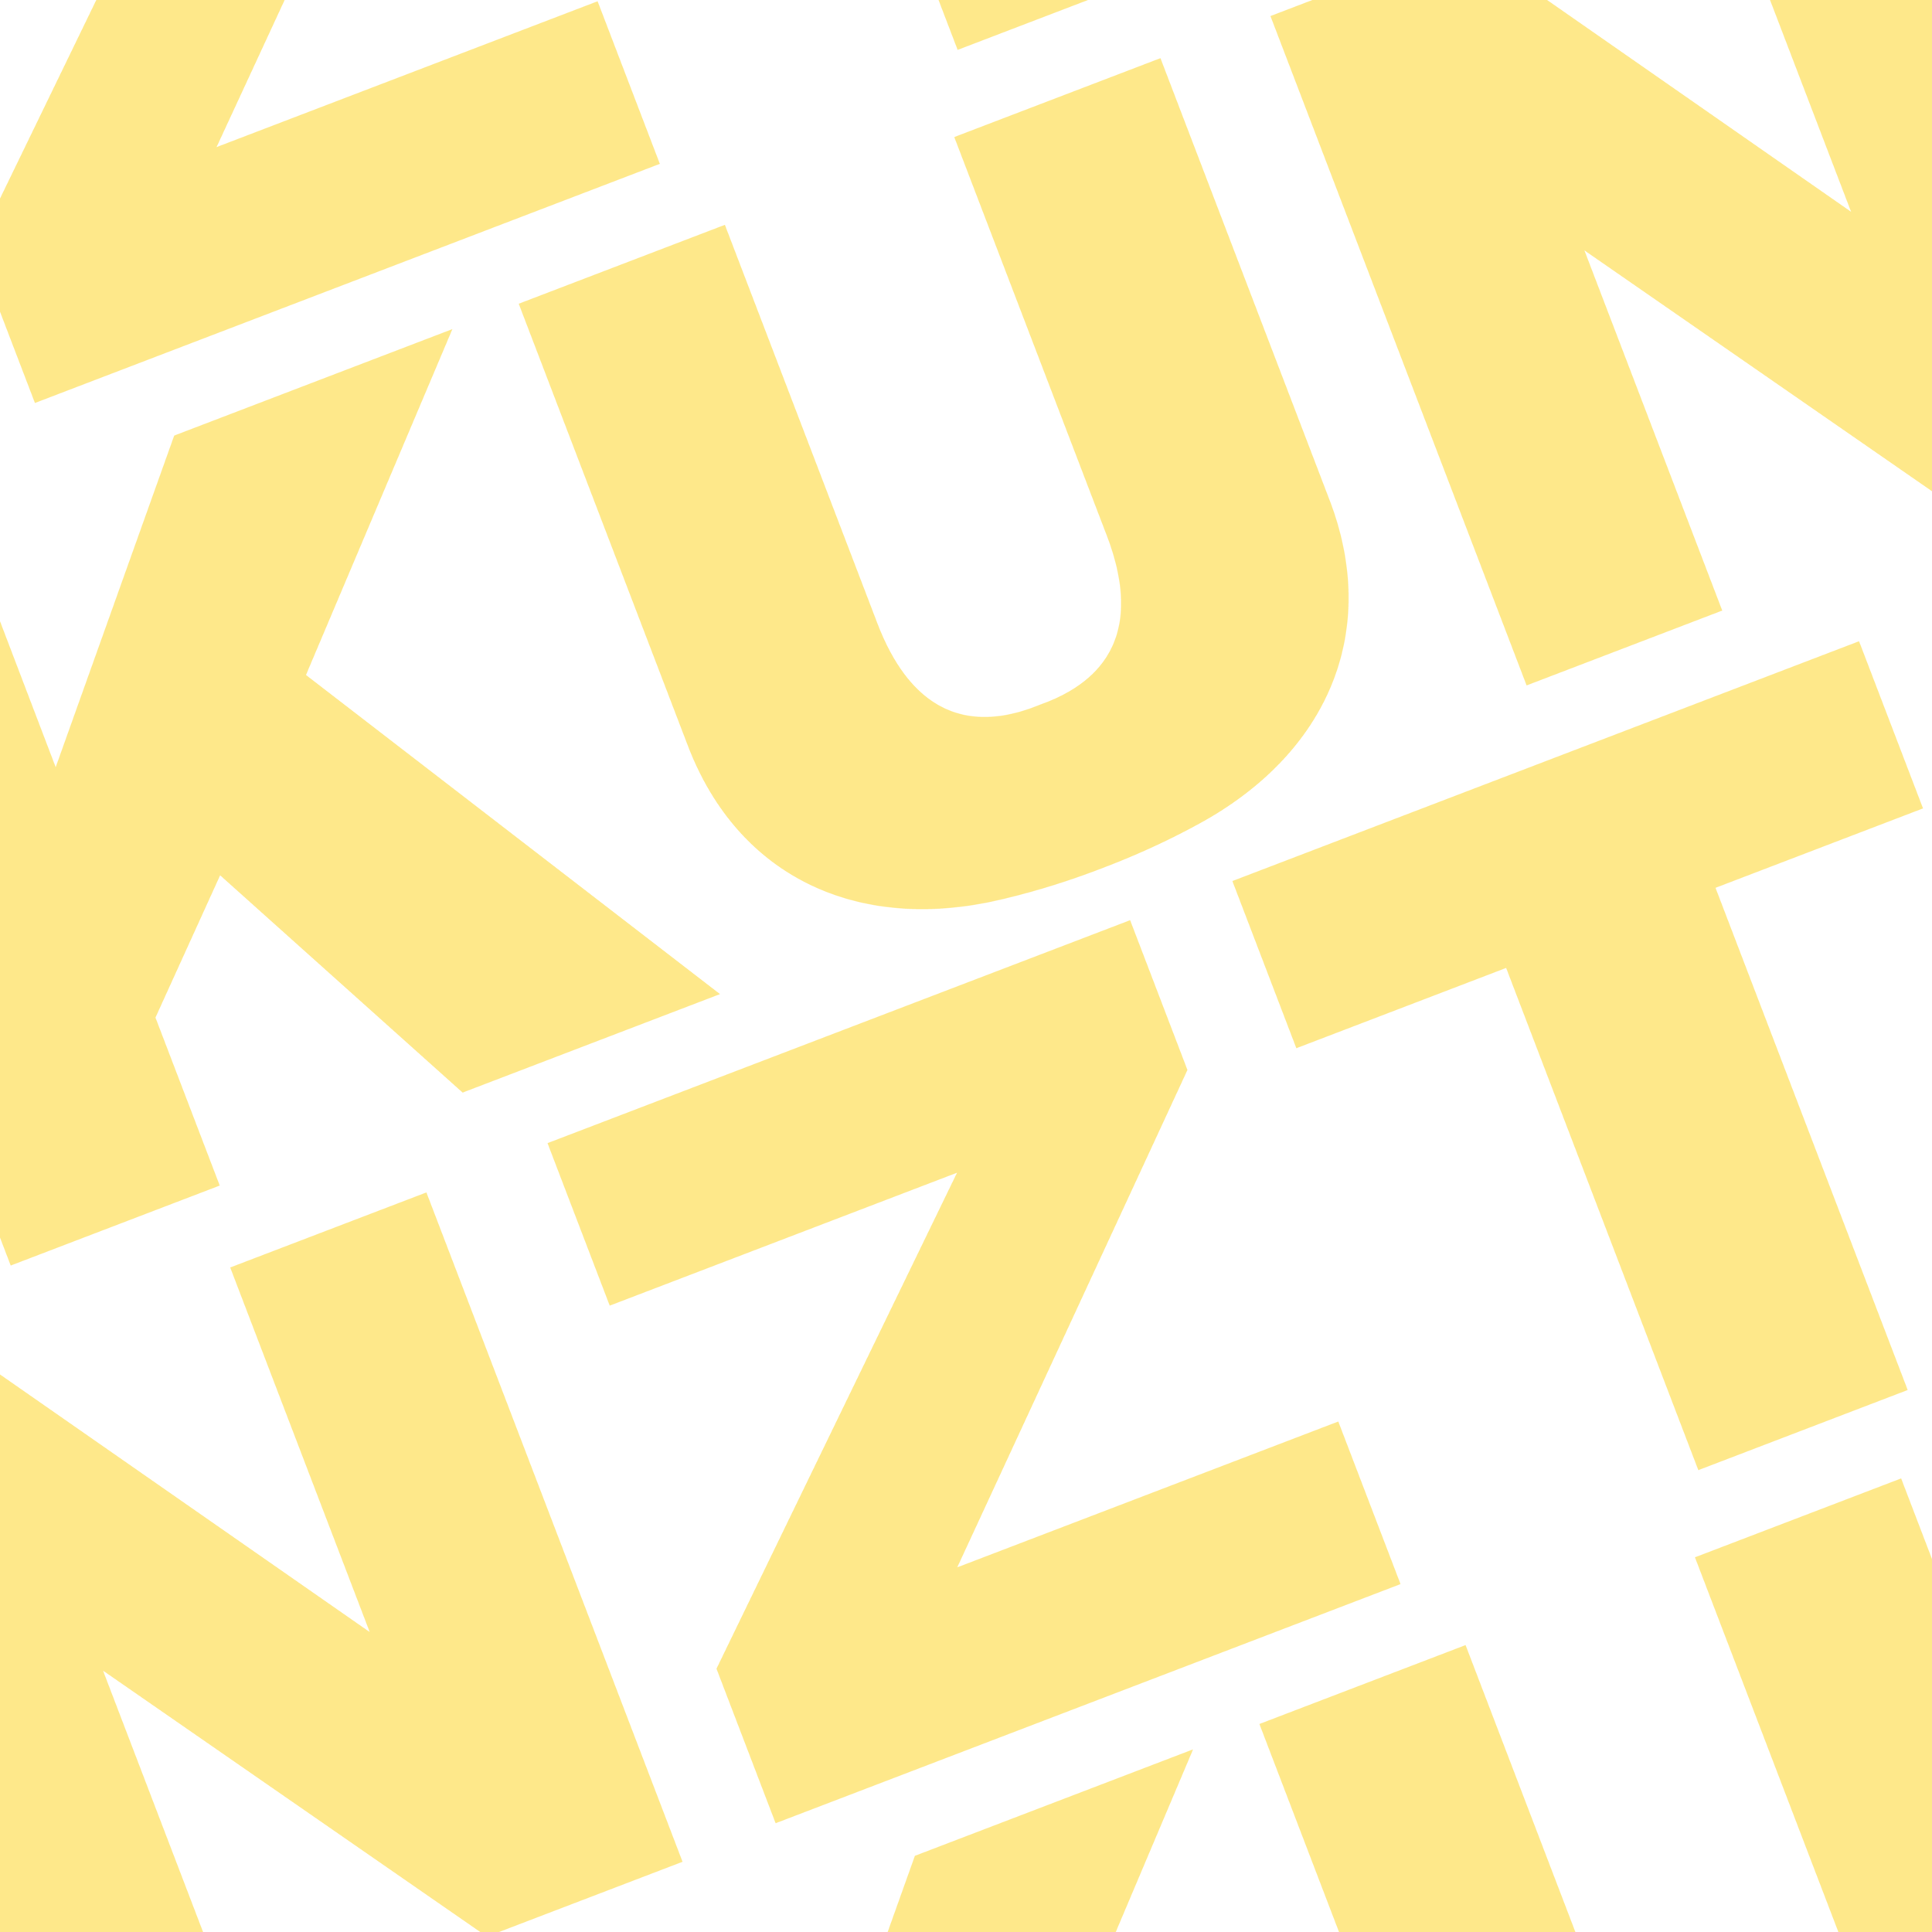 Kunzt_Yellow_White_Insta Square.png